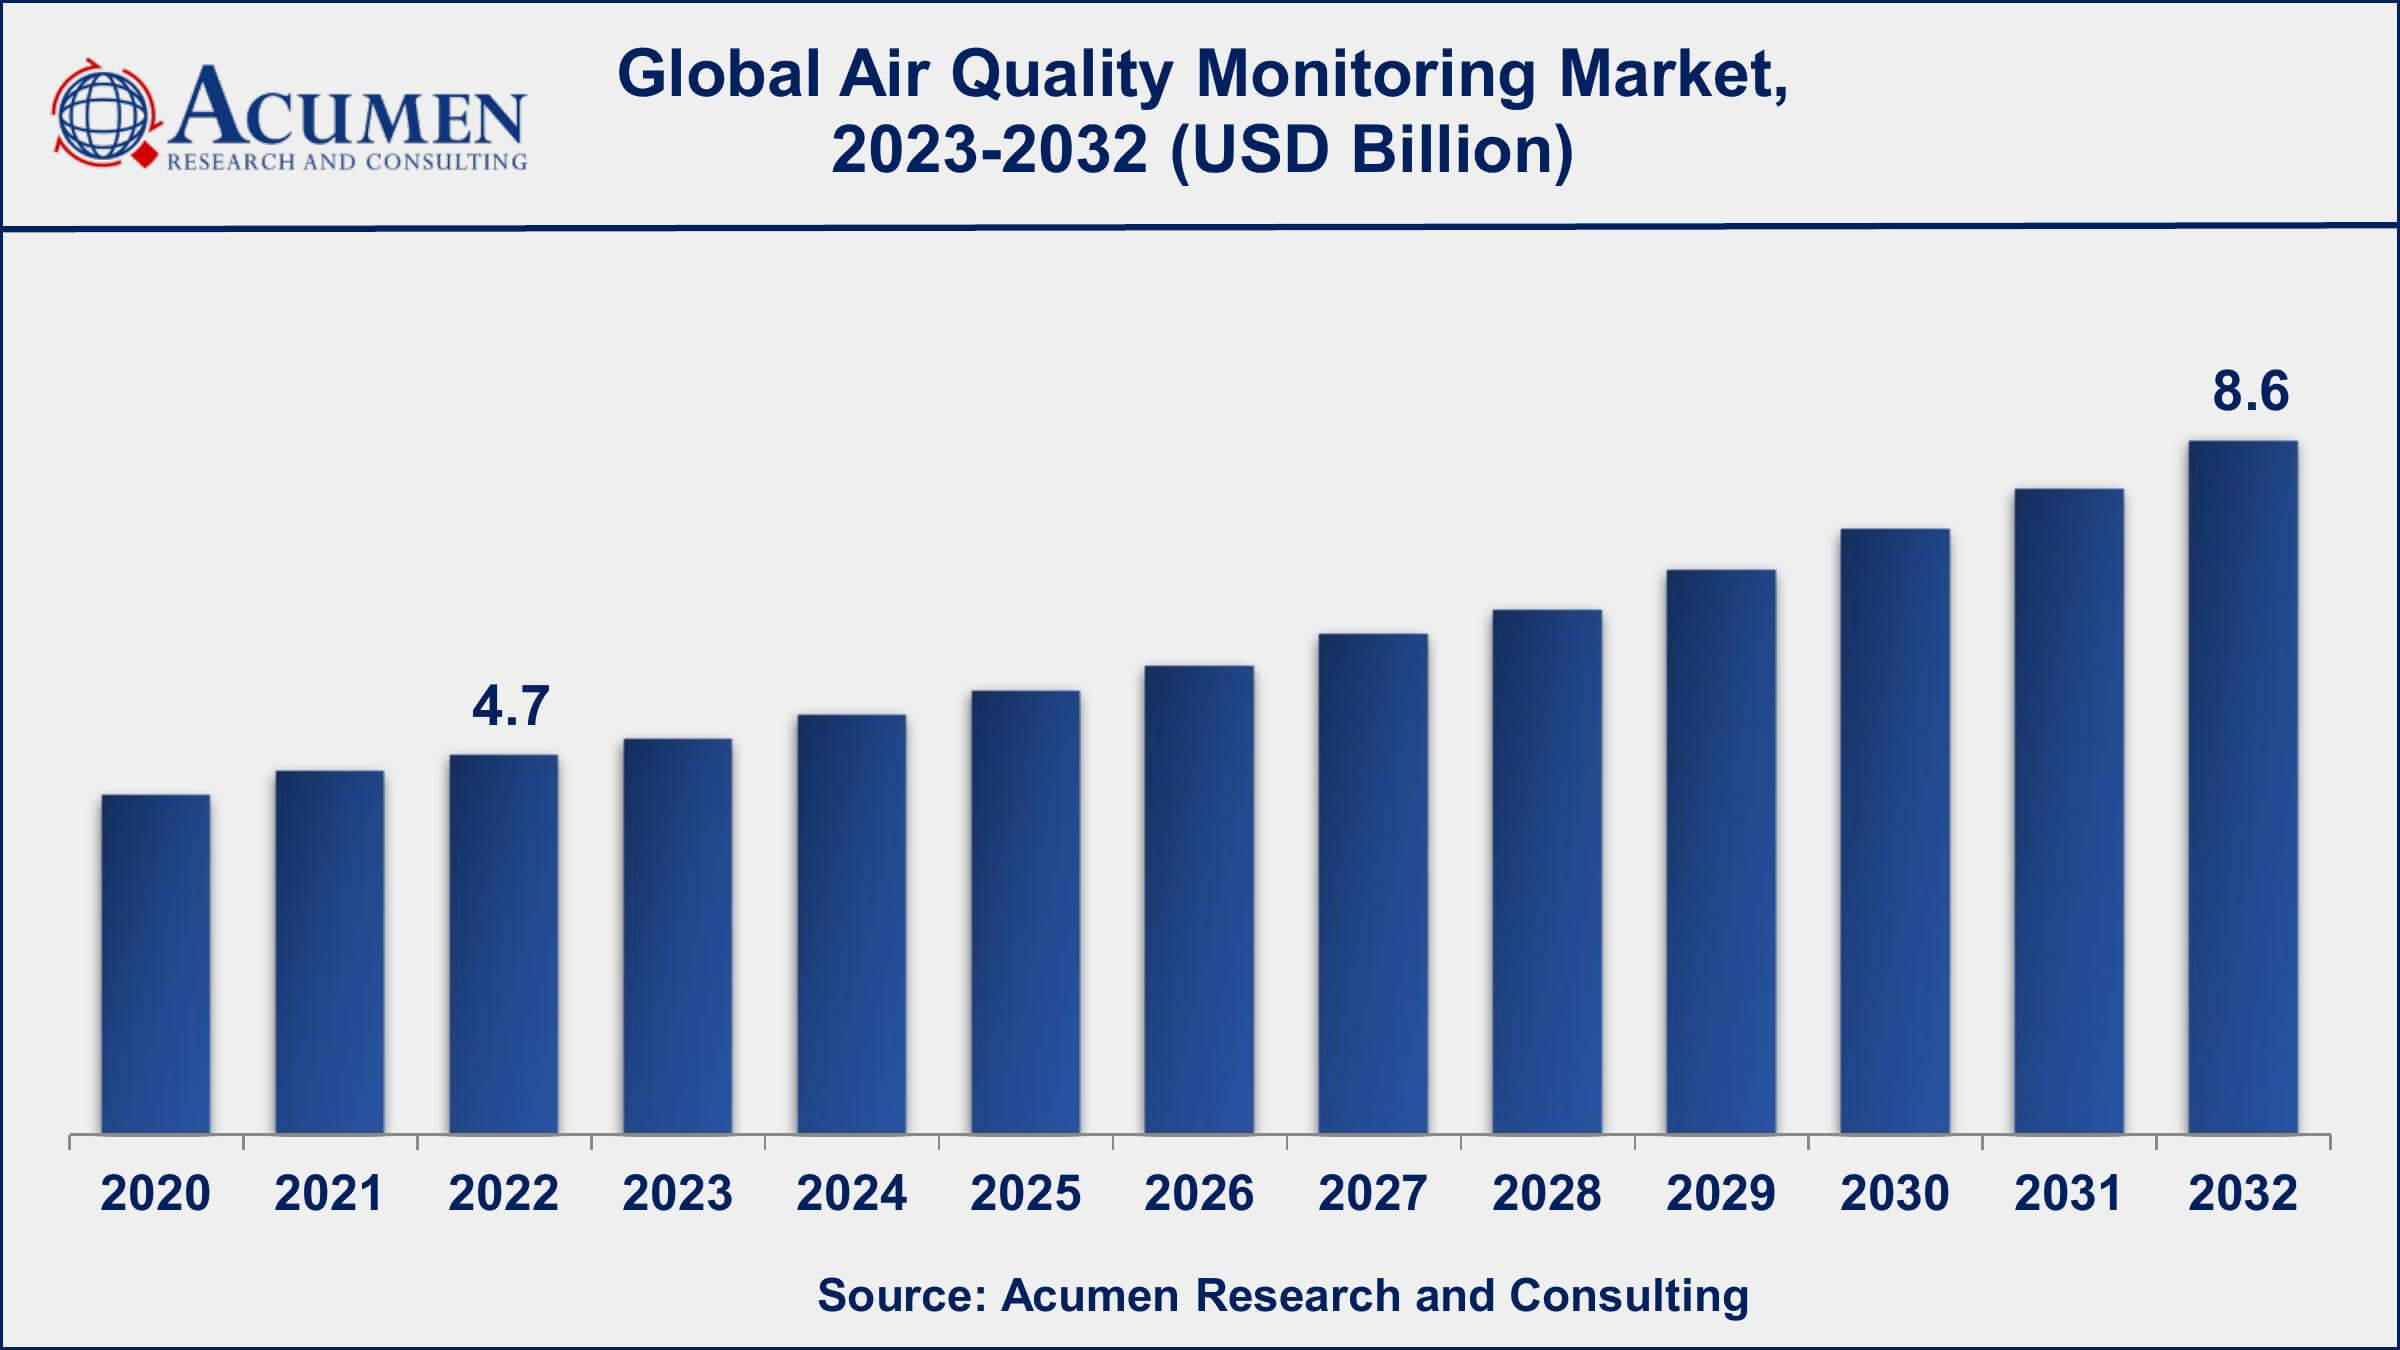 Global Air Quality Monitoring Market Dynamics